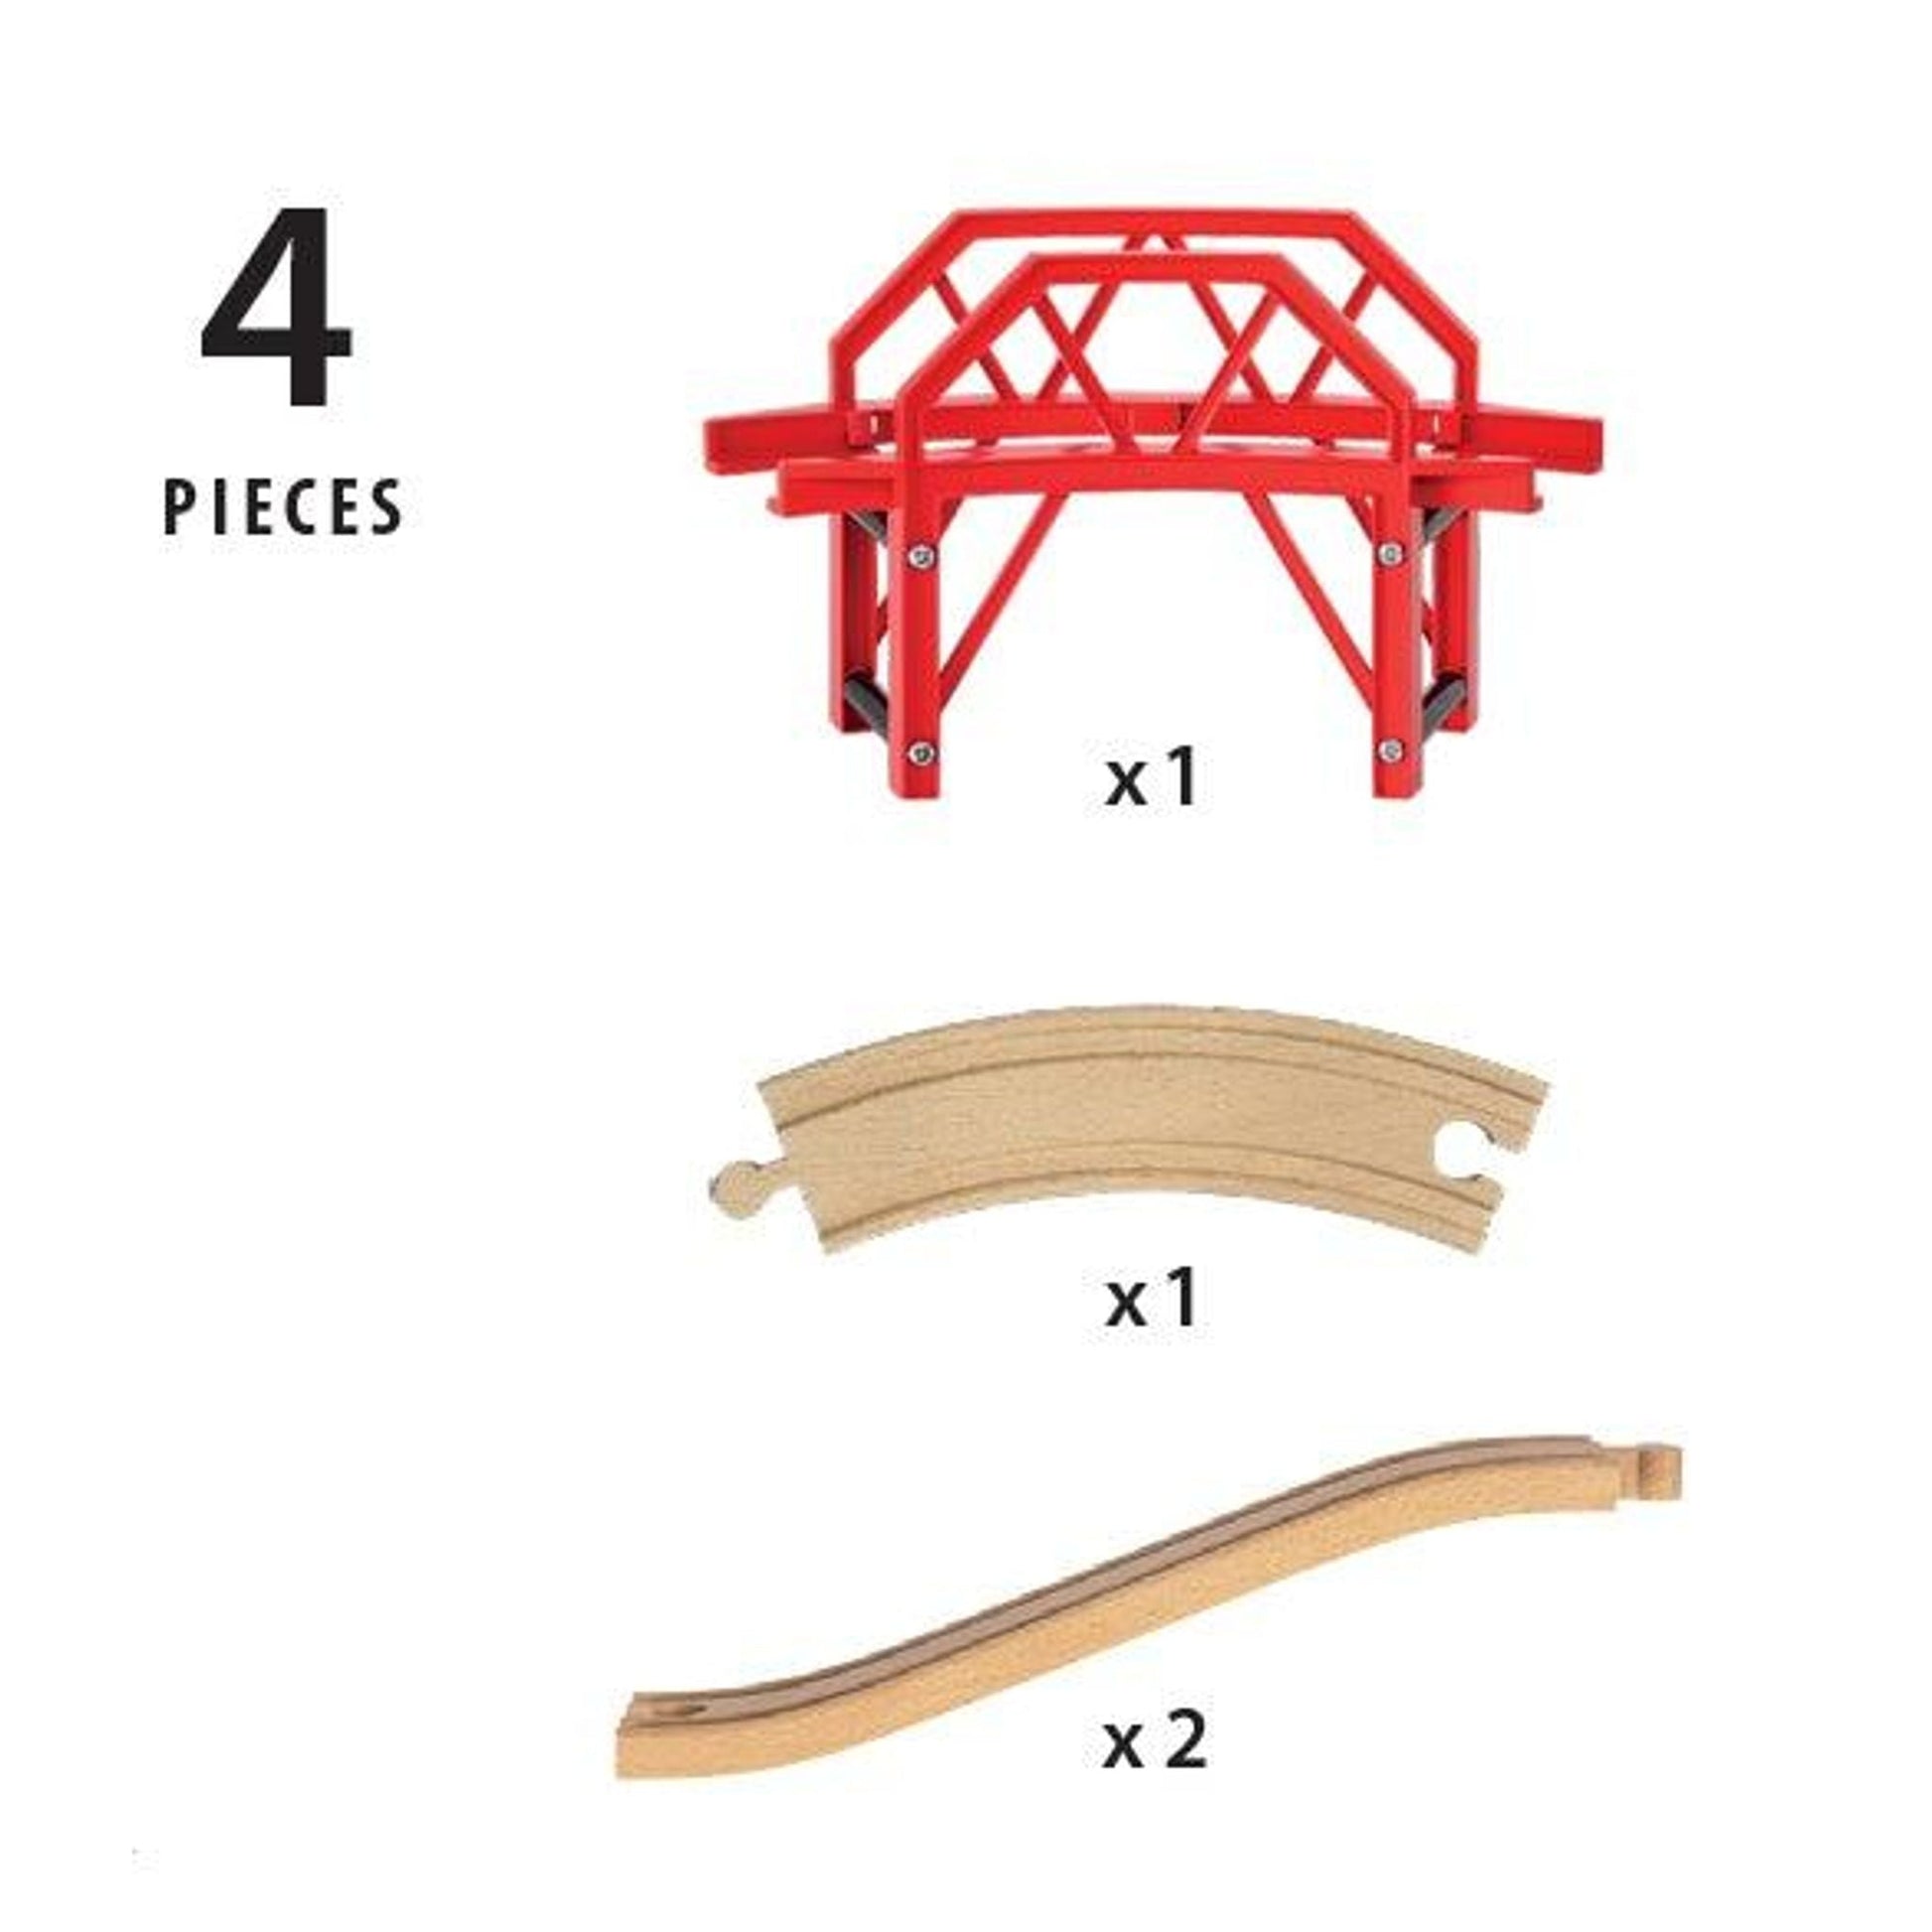 Bridge - Curved Bridge 4 pieces - Toybox Tales